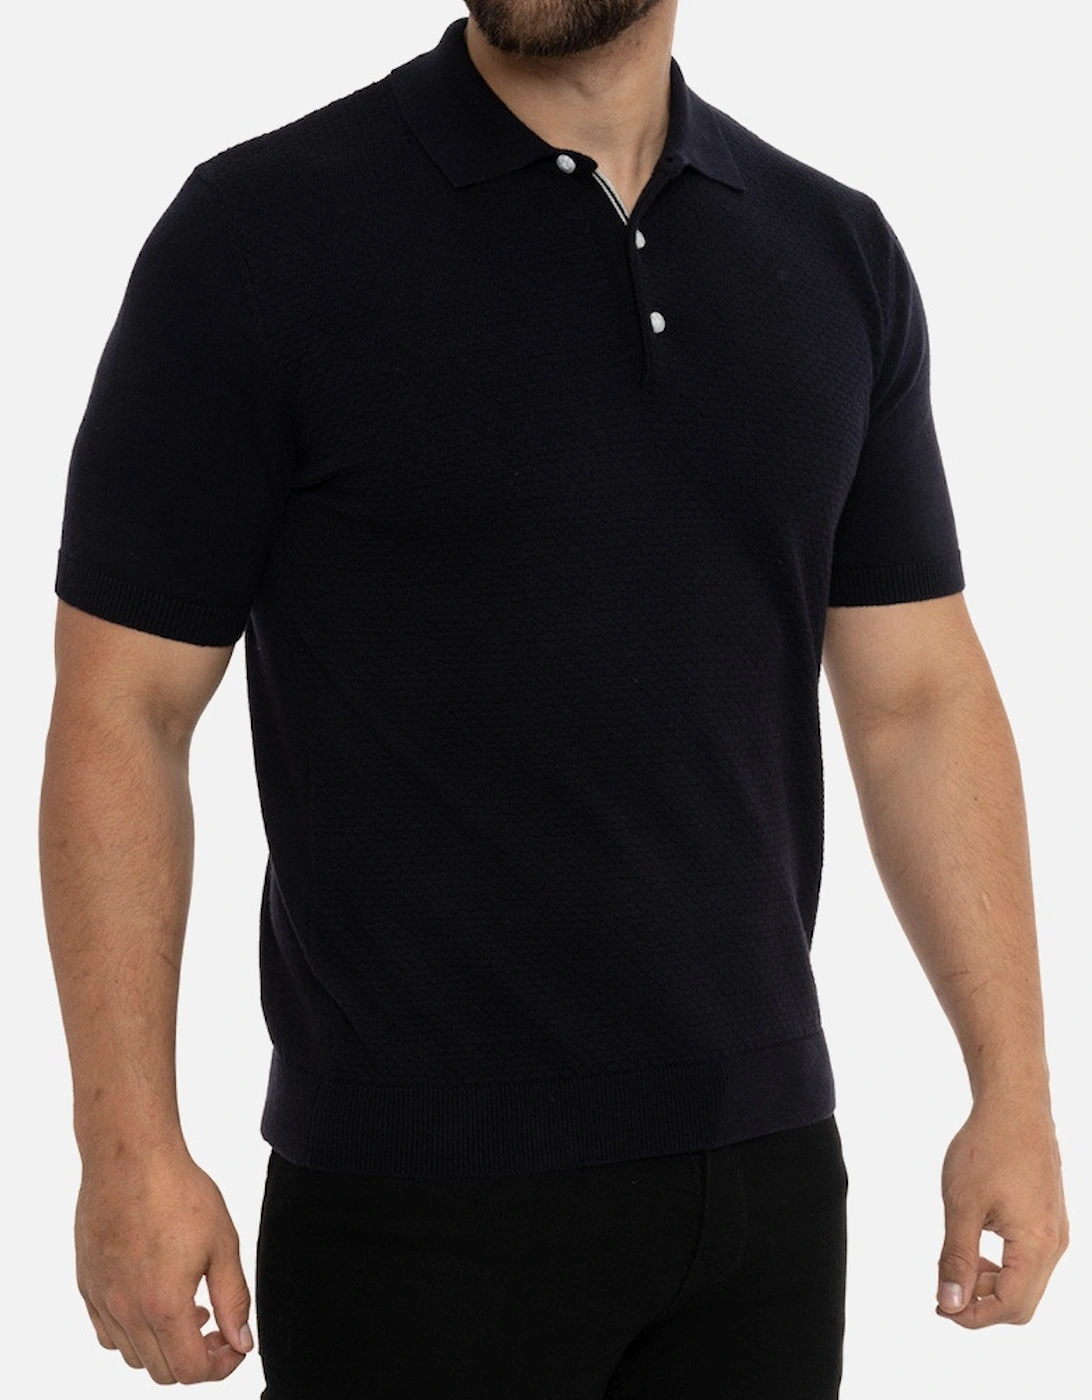 Mens S/S Knit Polo Shirt (Navy)